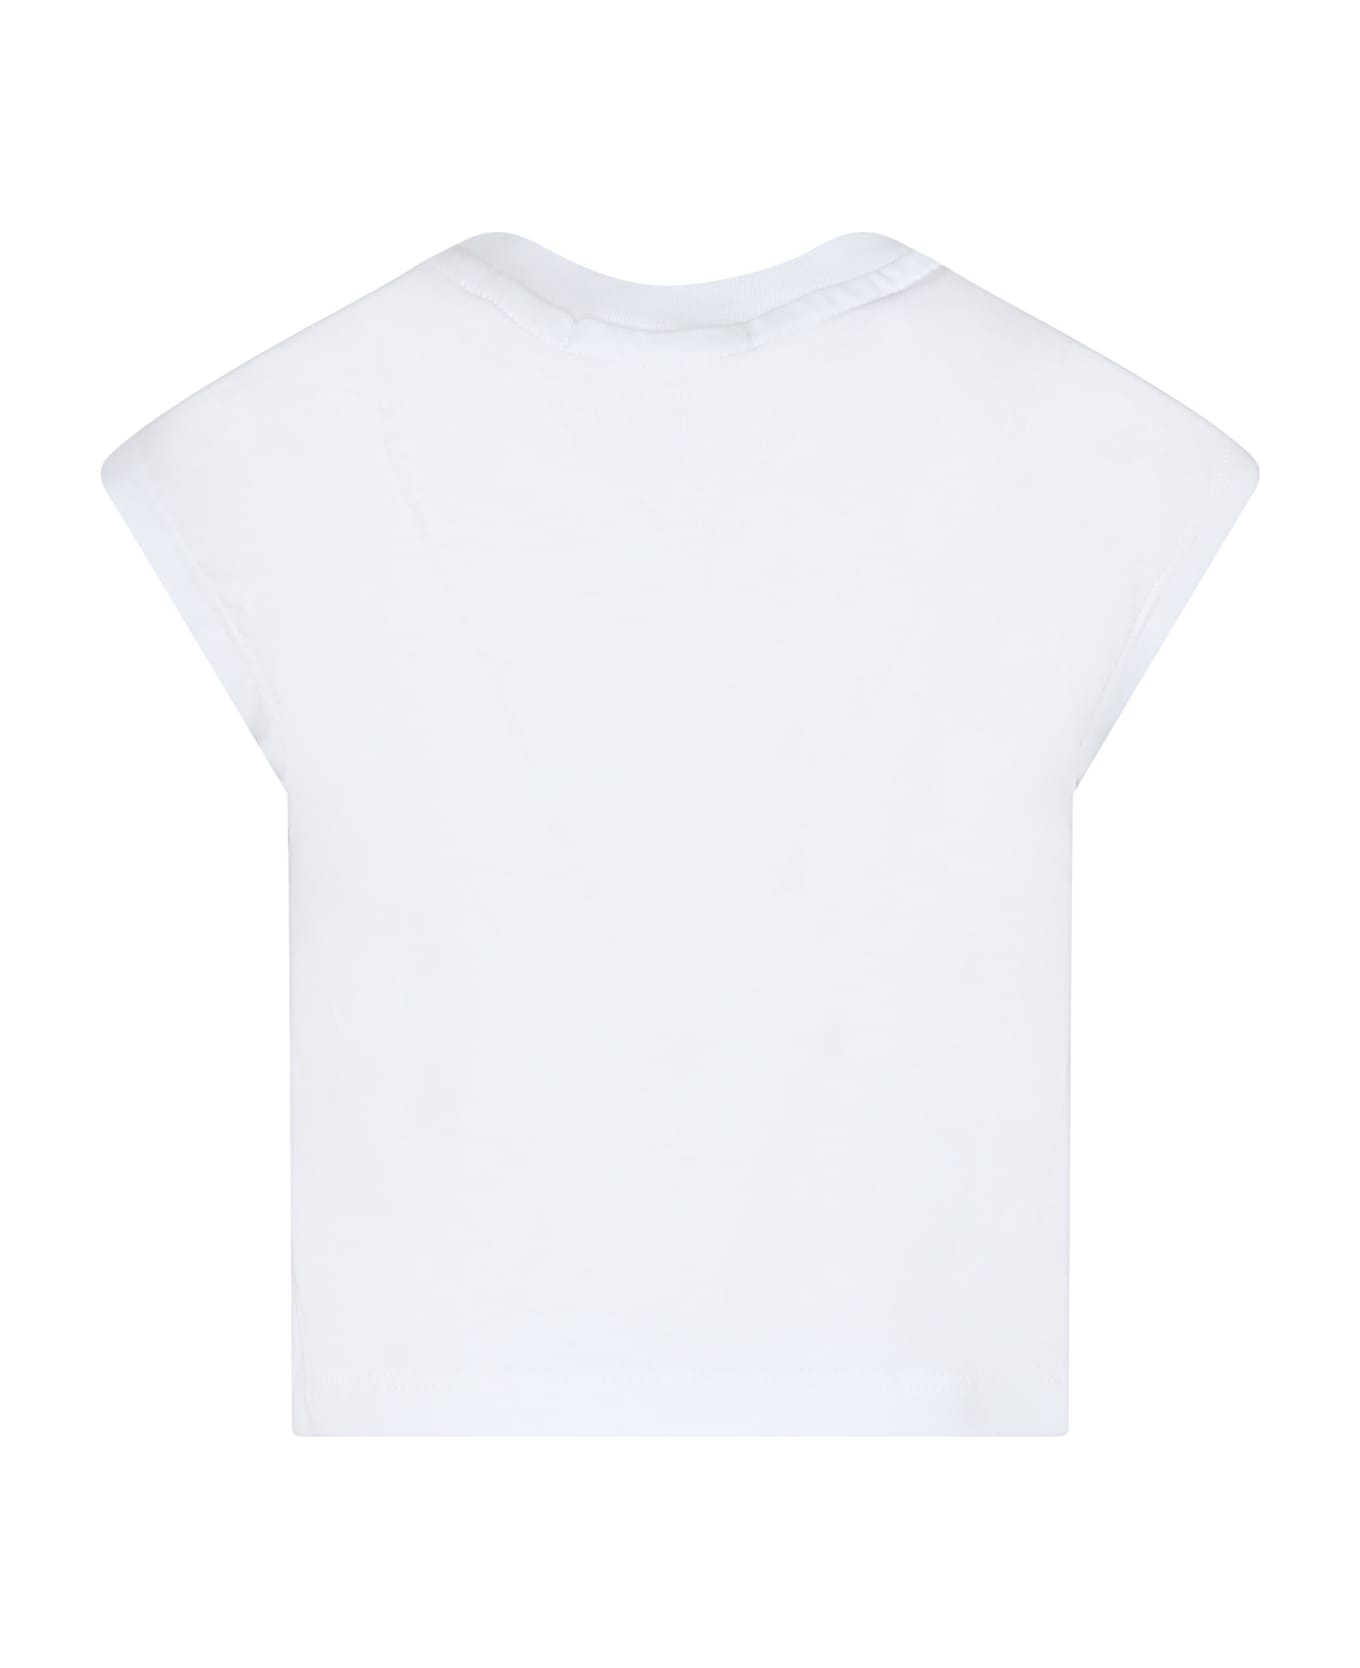 MSGM White T-shirt For Girl With Cherryprint - White